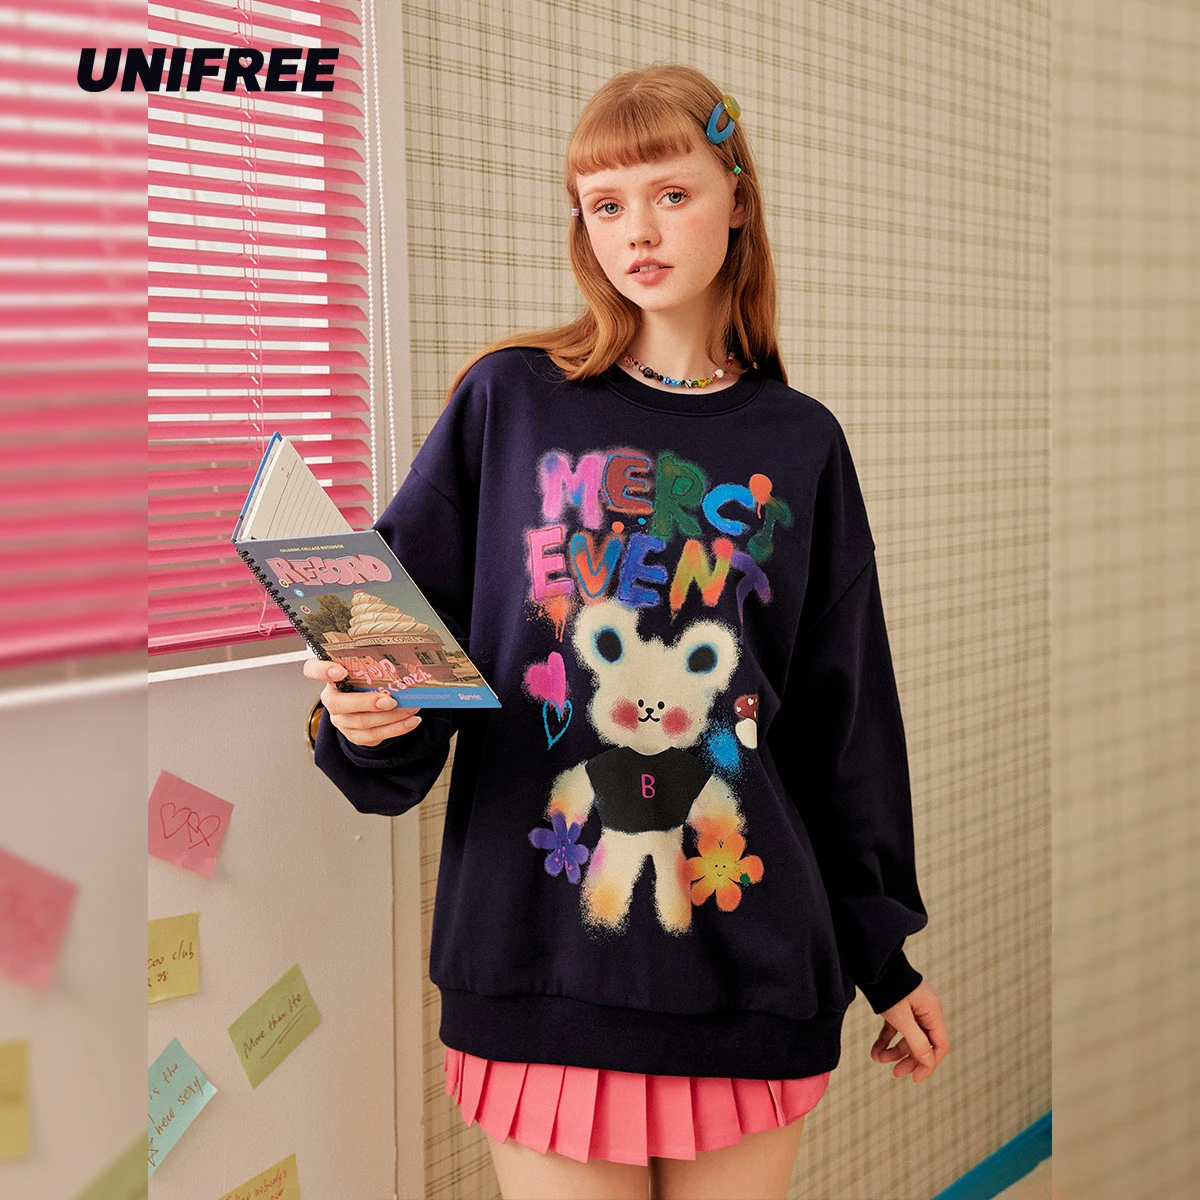 

UNIFREE Cute Doodles Sweatshirts for Women Streetwear Hip-Hop Loose Colorful Cartoons Pullovers Fashion Long Sleeves Women Tops